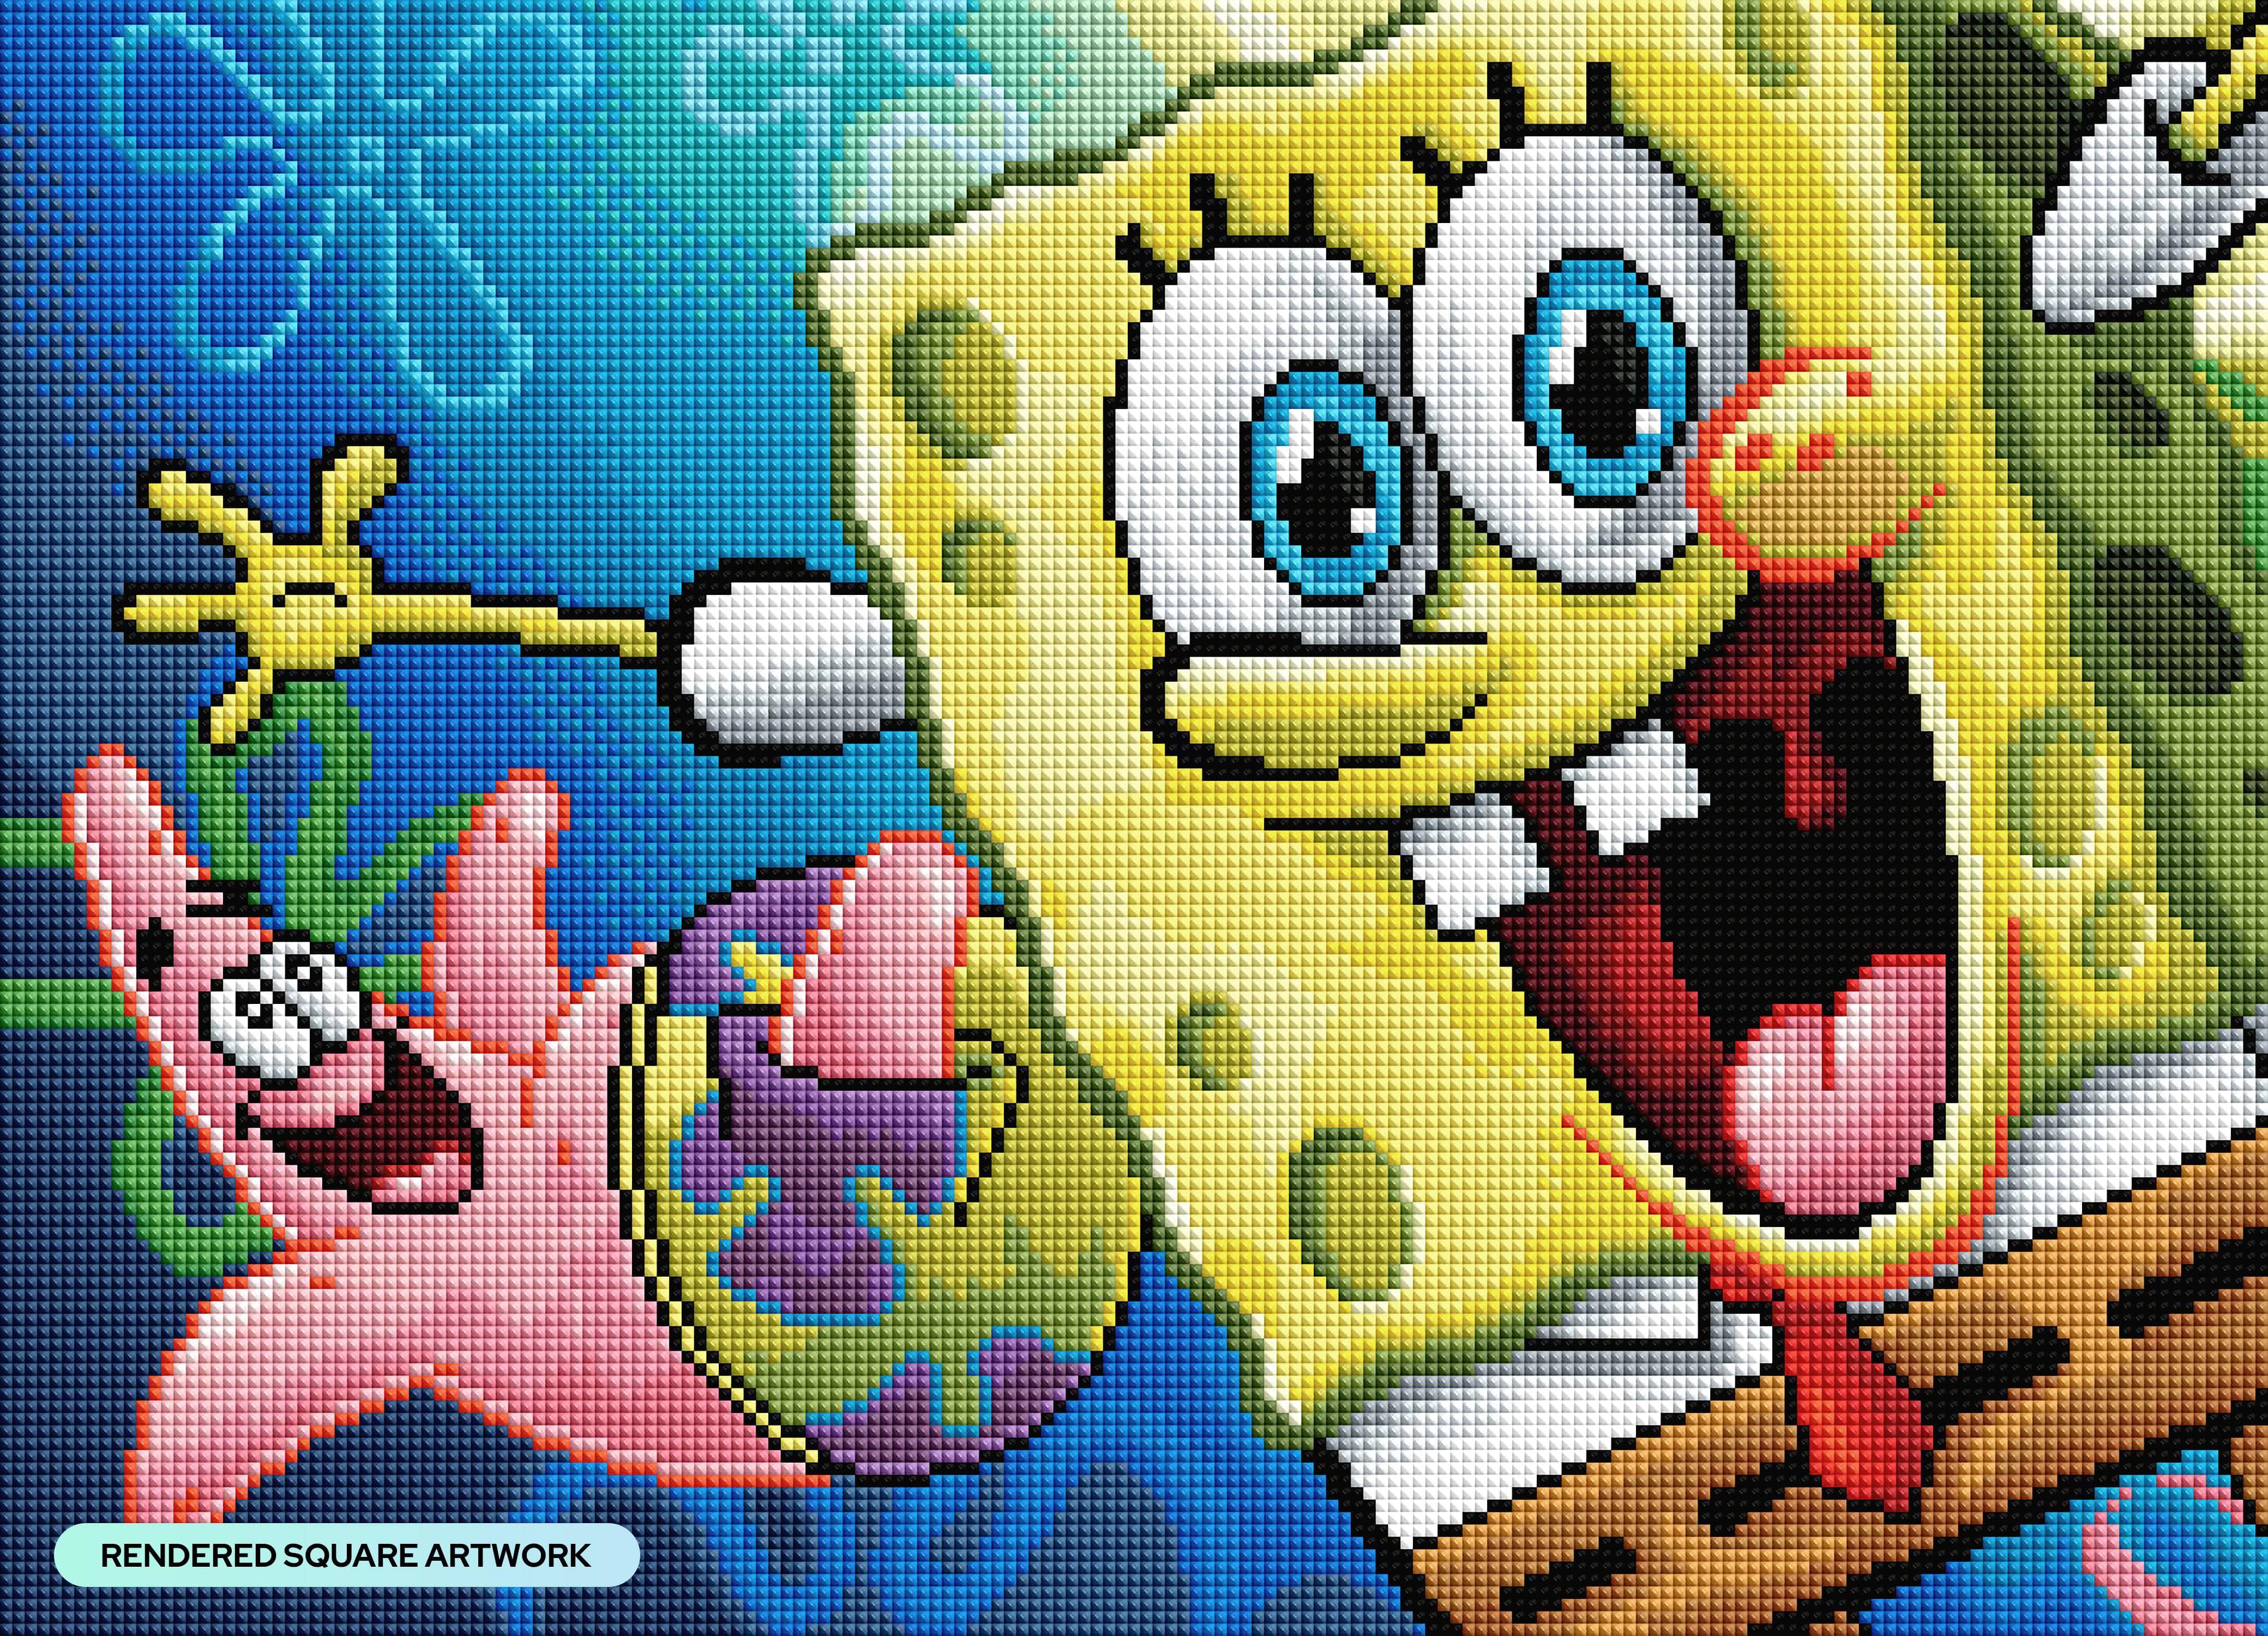 SpongeBob SquarePants Diamond Painting Kit 